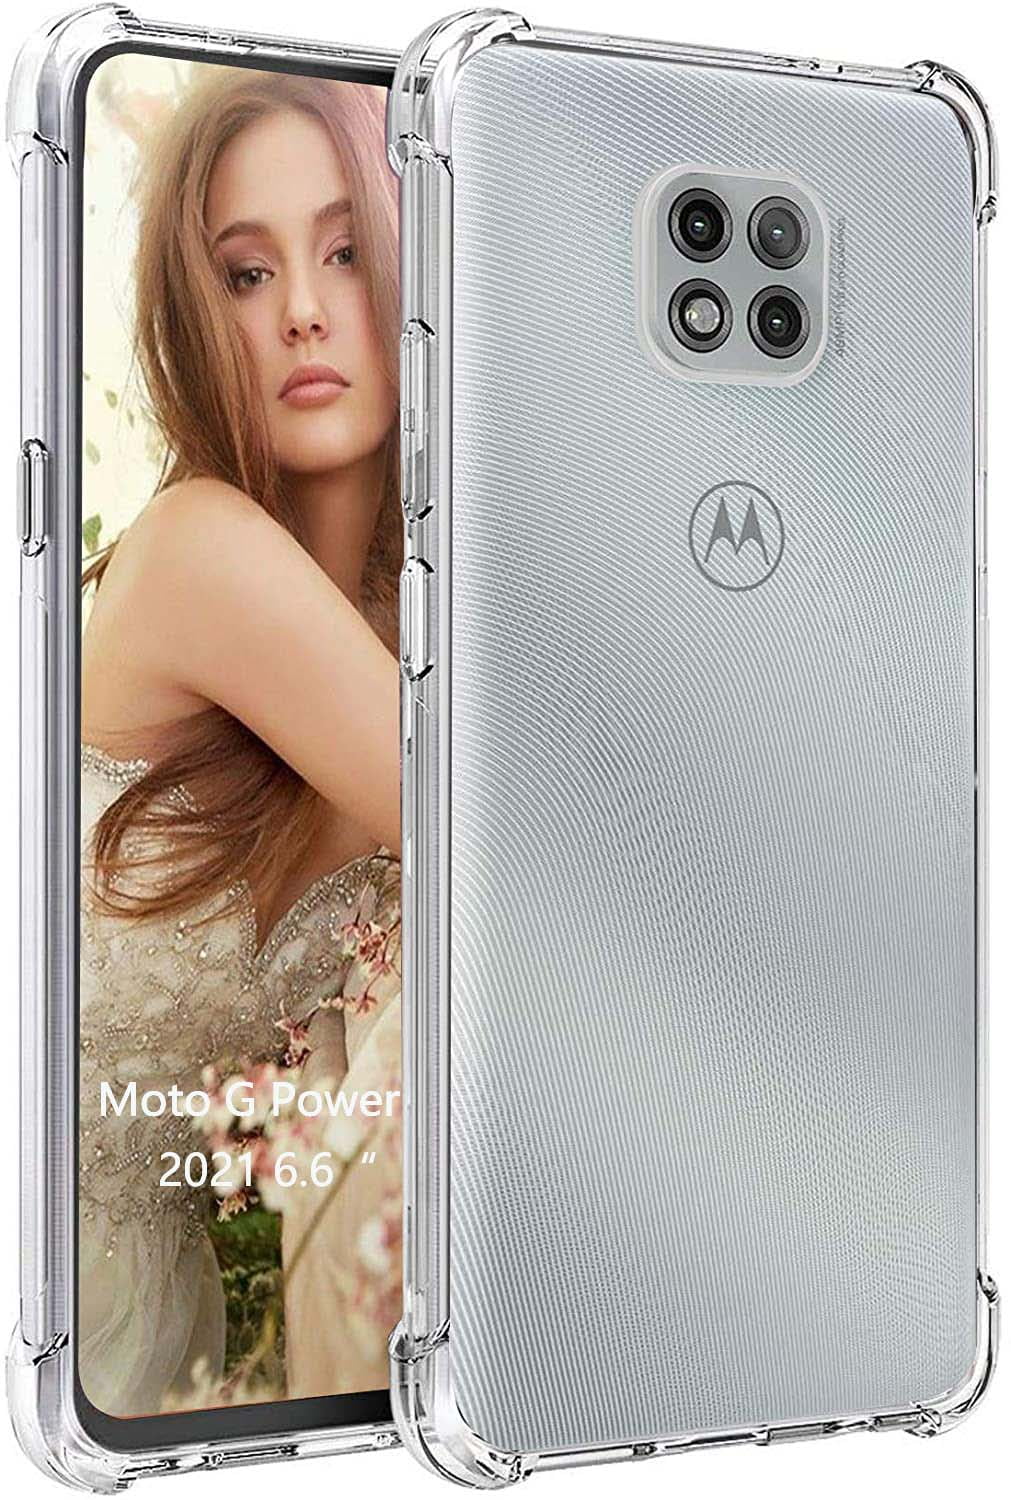 Clear Phone Case Cover Motorola Moto G Power 2021,Moto G Power,Opal Marble 2 Print,Light,Flexible,ProtectUSA